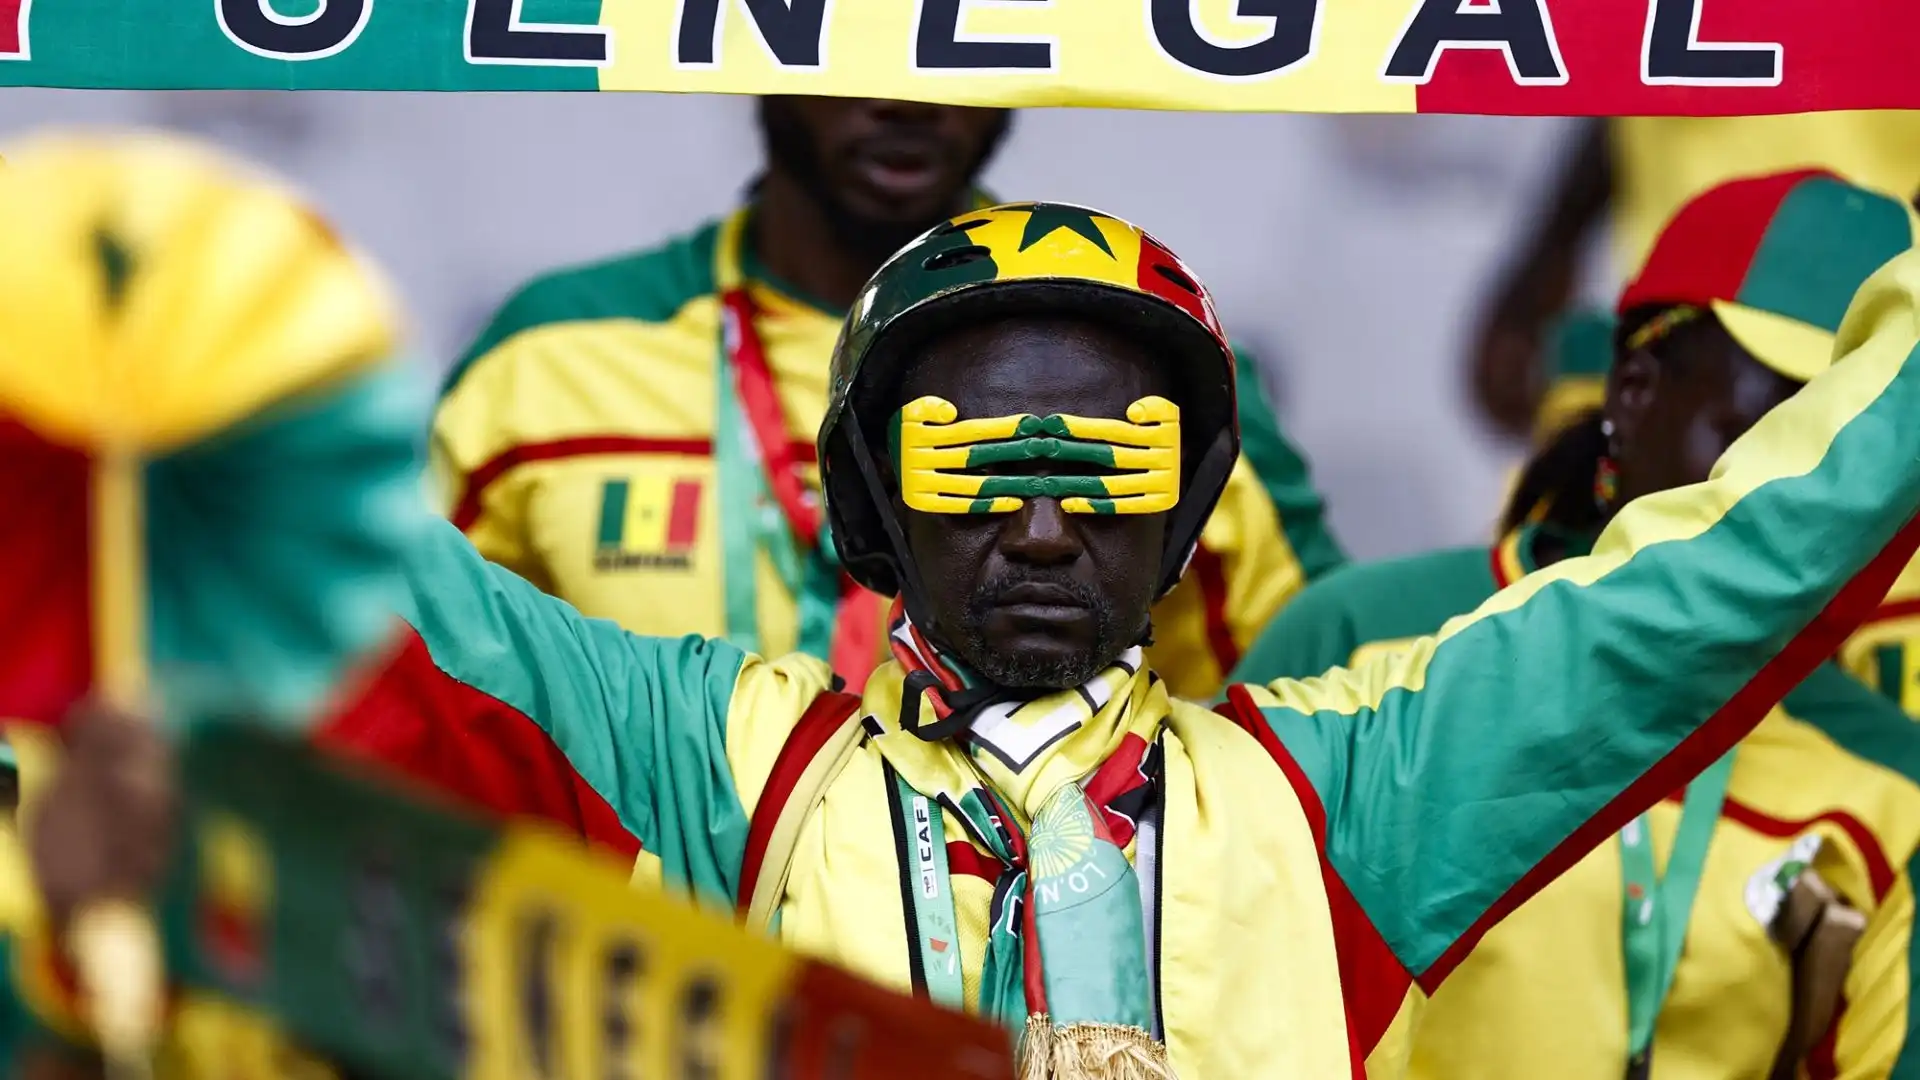 Un altro tifoso del Senegal con una maschera bizzarra